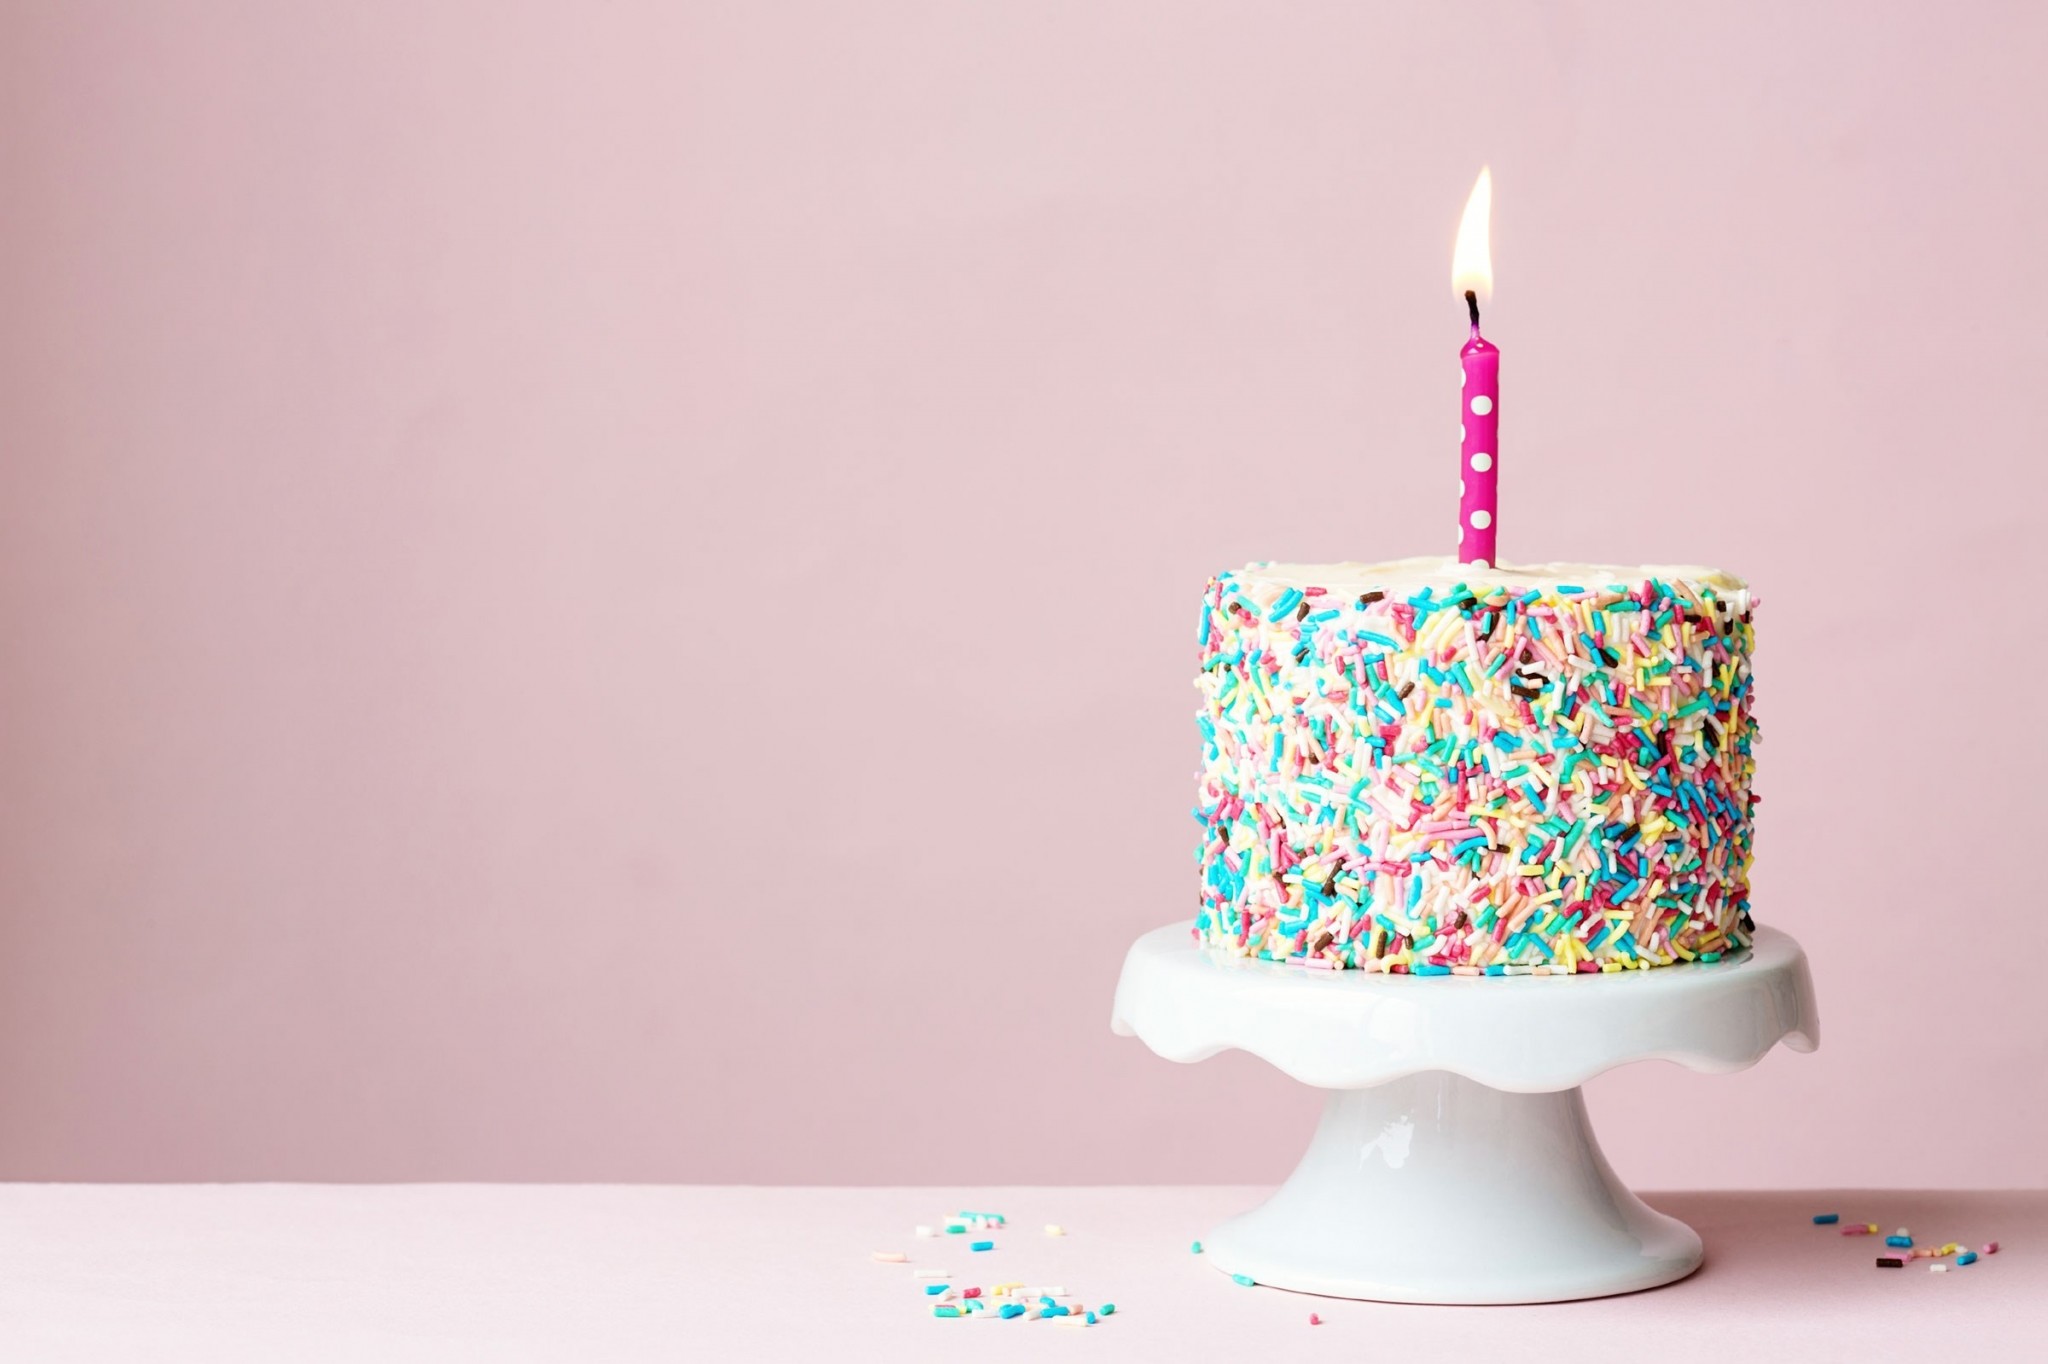 happy birthday wallpaper,cake,birthday candle,birthday cake,pink,candle